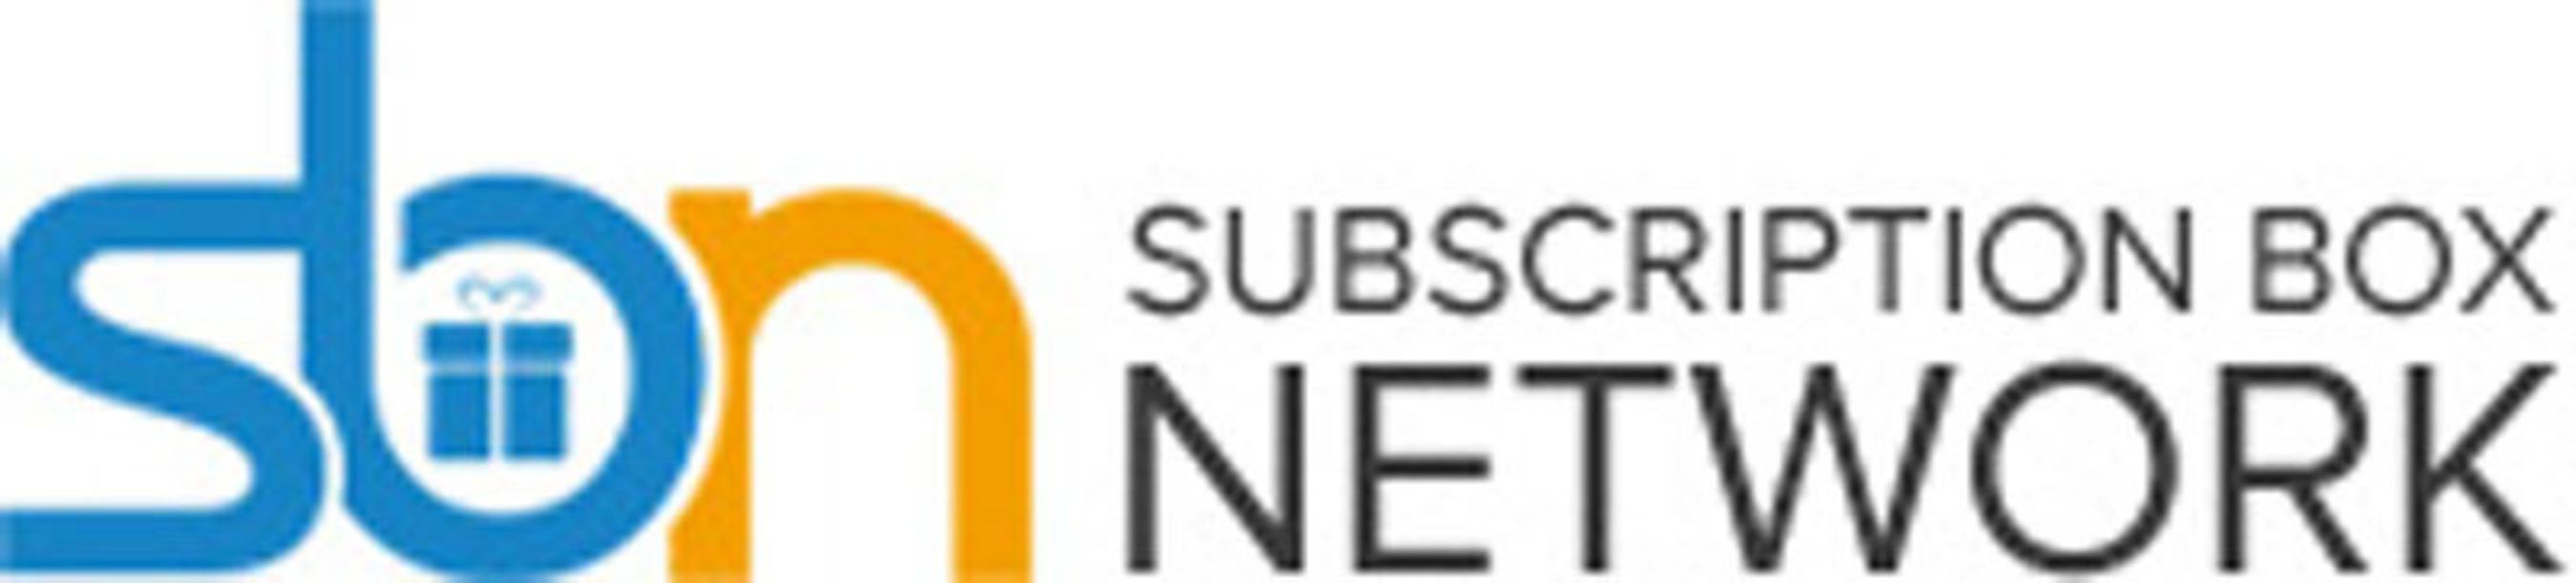 Subscription Box Network. (PRNewsFoto/Subscription Box Network) (PRNewsFoto/SUBSCRIPTION BOX NETWORK)